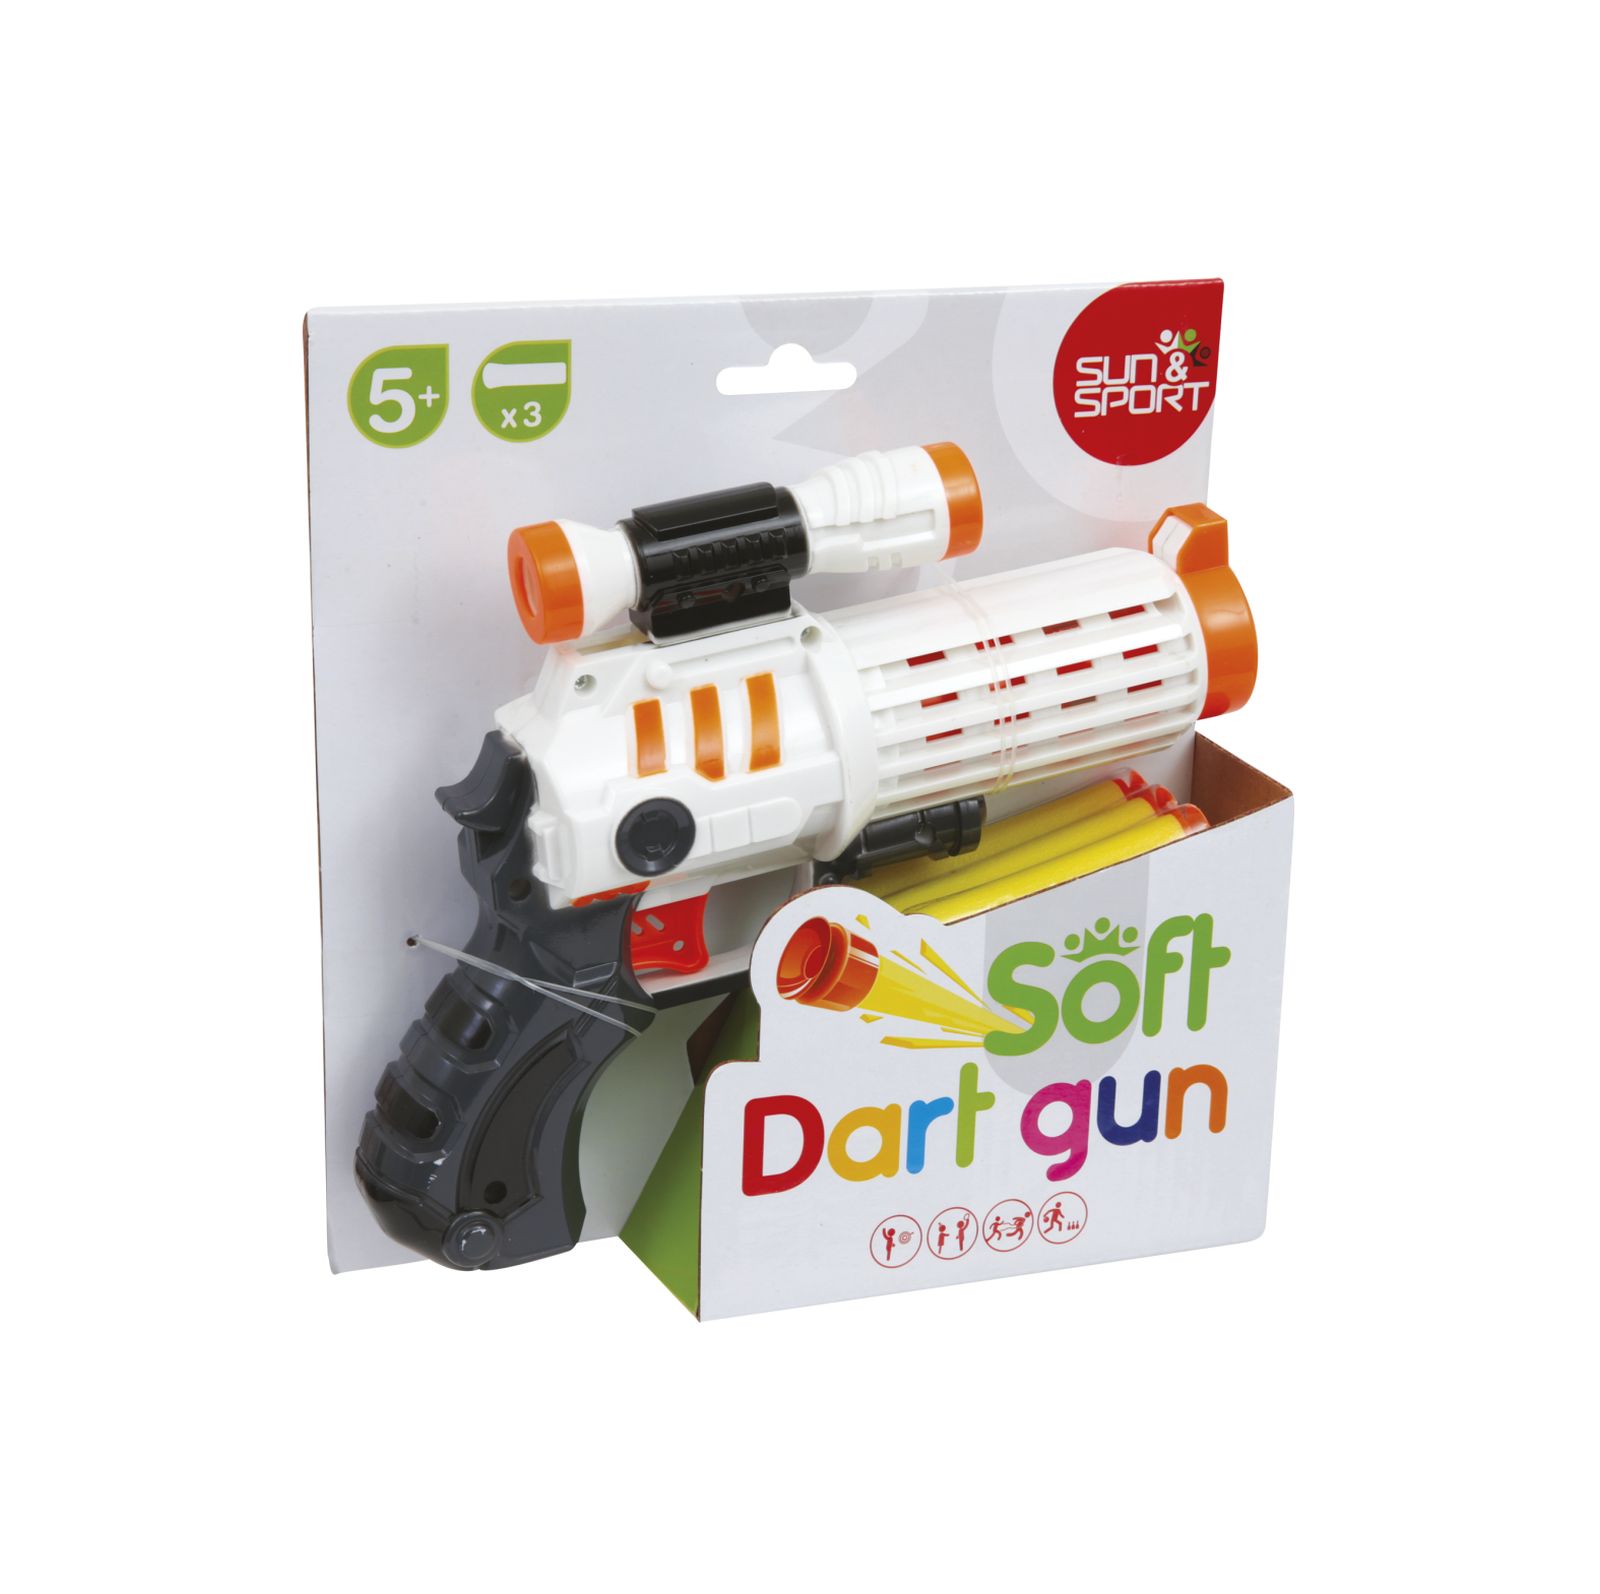 Pistola soft dart - SUN&SPORT